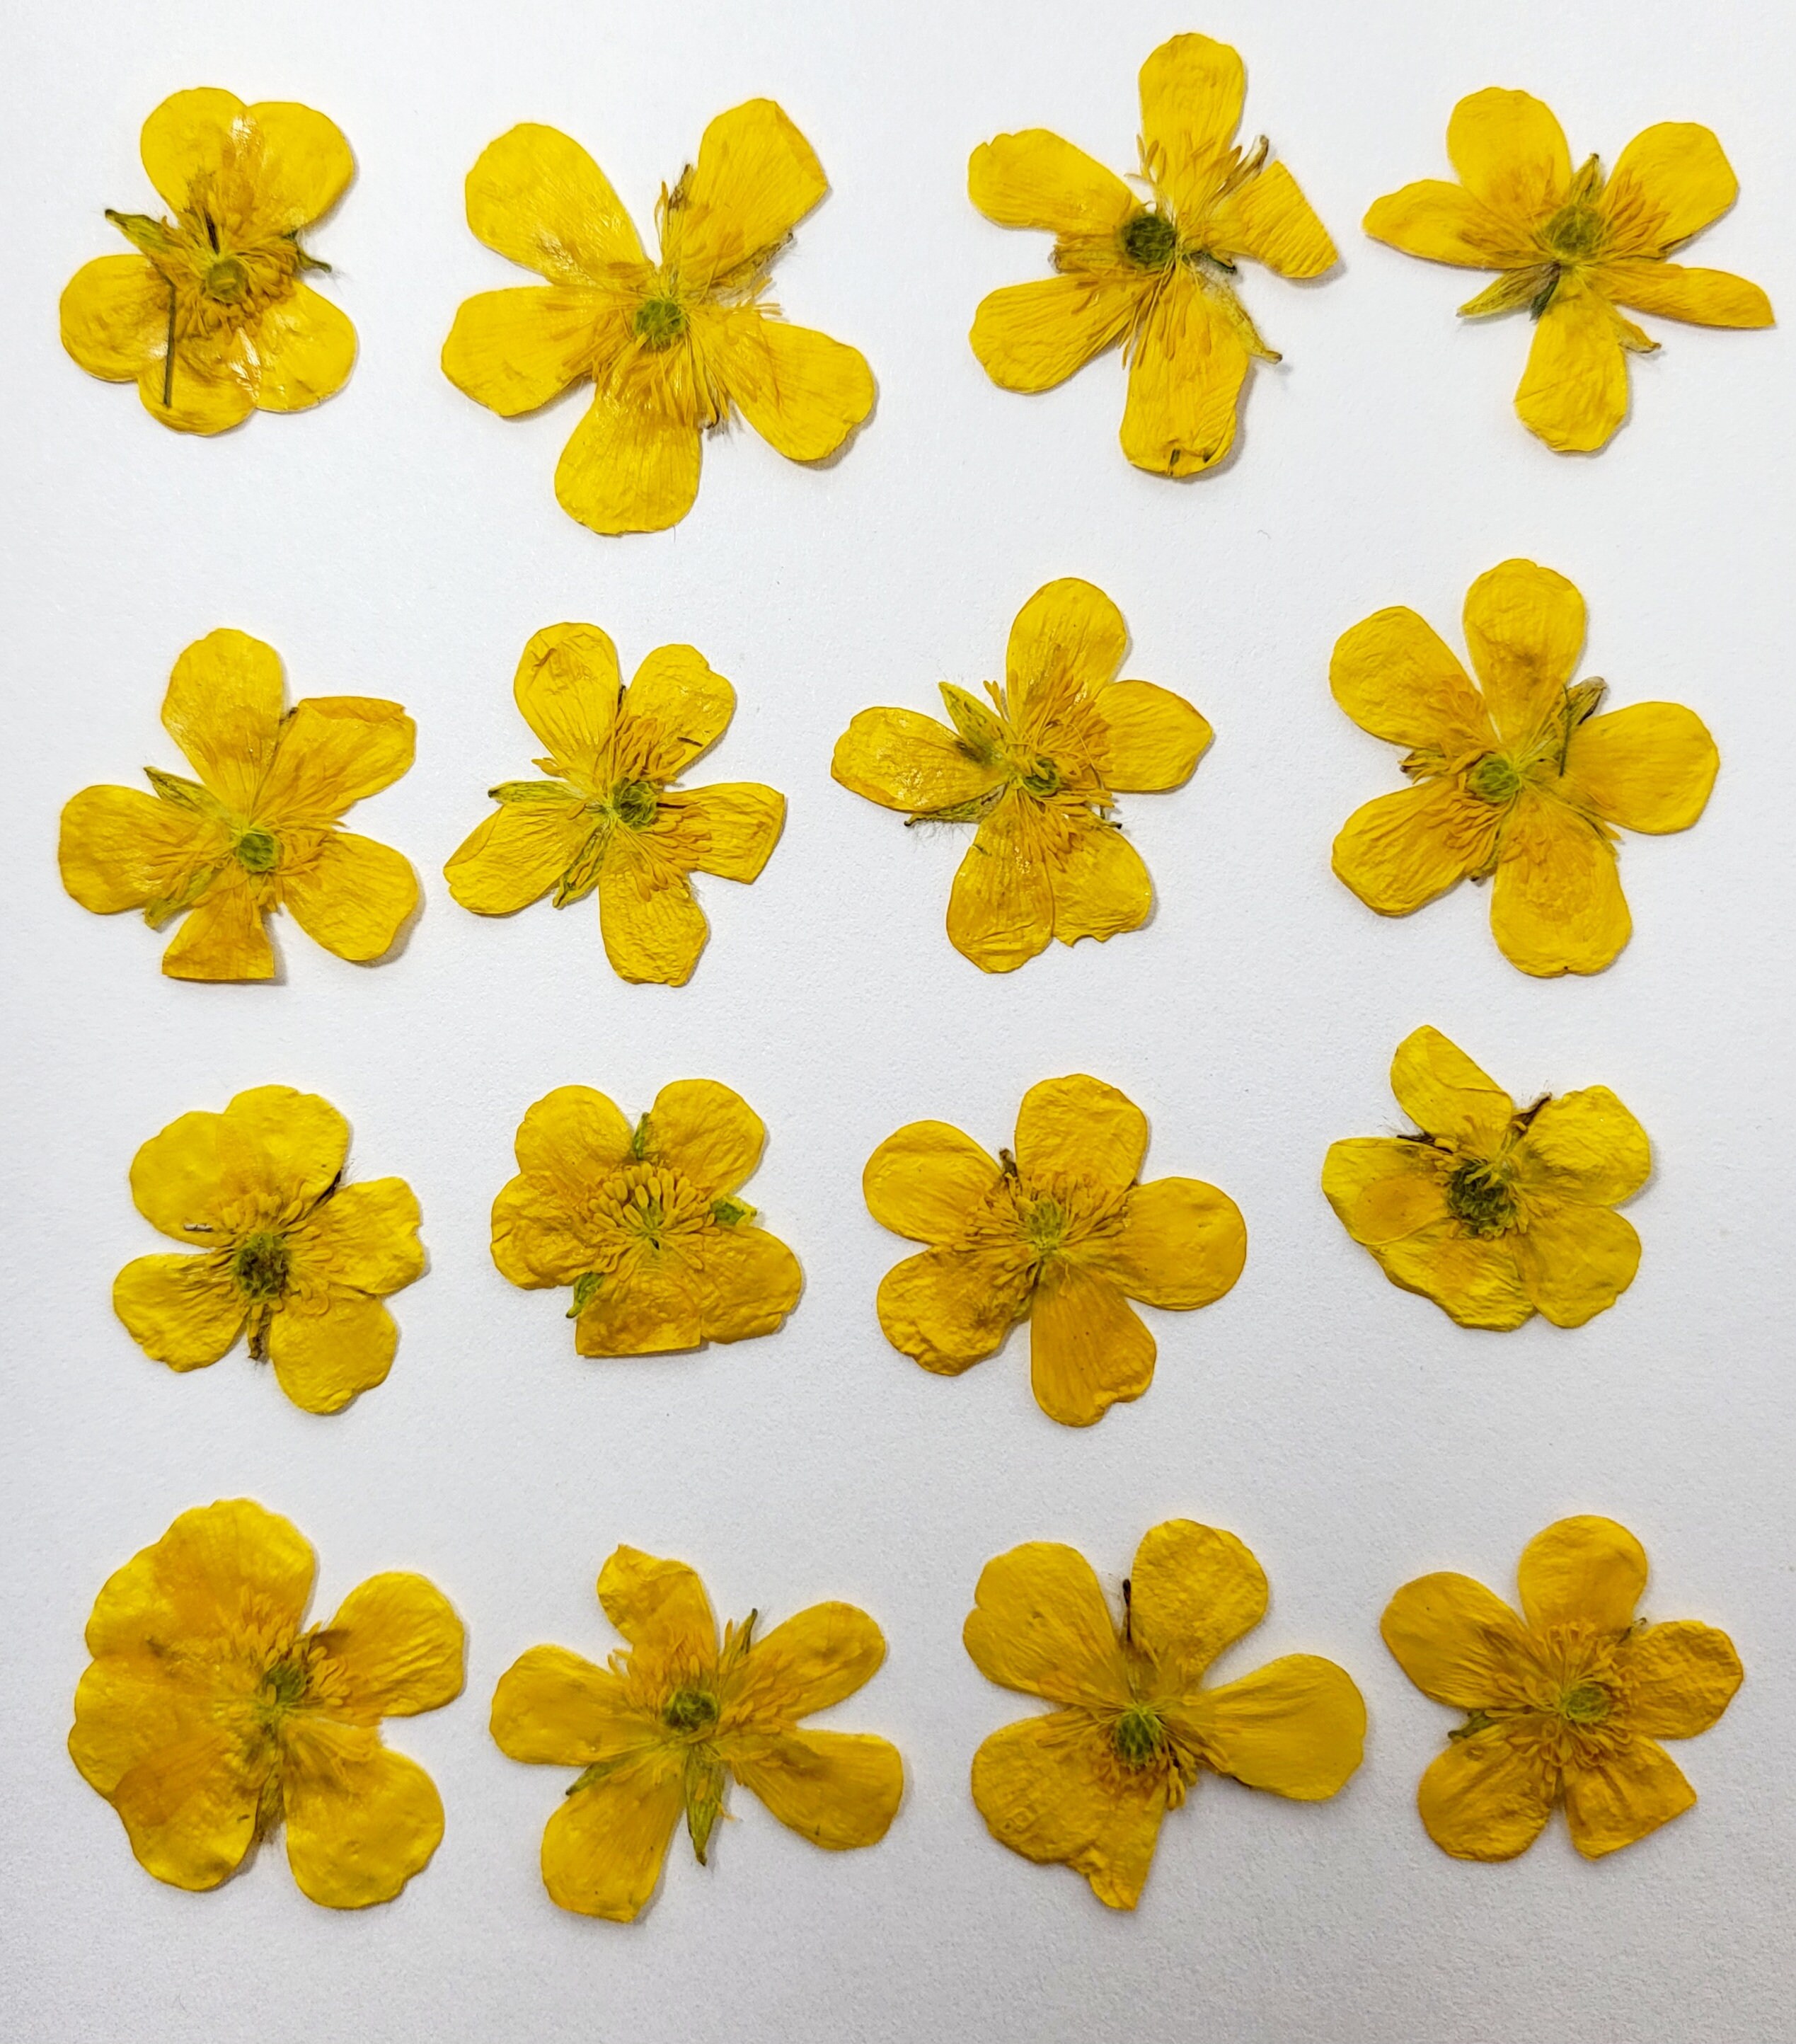 6 PCS Set (6-9CM) Dried Pressed Yellow Flower Stems, Real Pressed dried  Flowers, Flat Pressed Flower, Preserved Yellow Dried Flower Stems